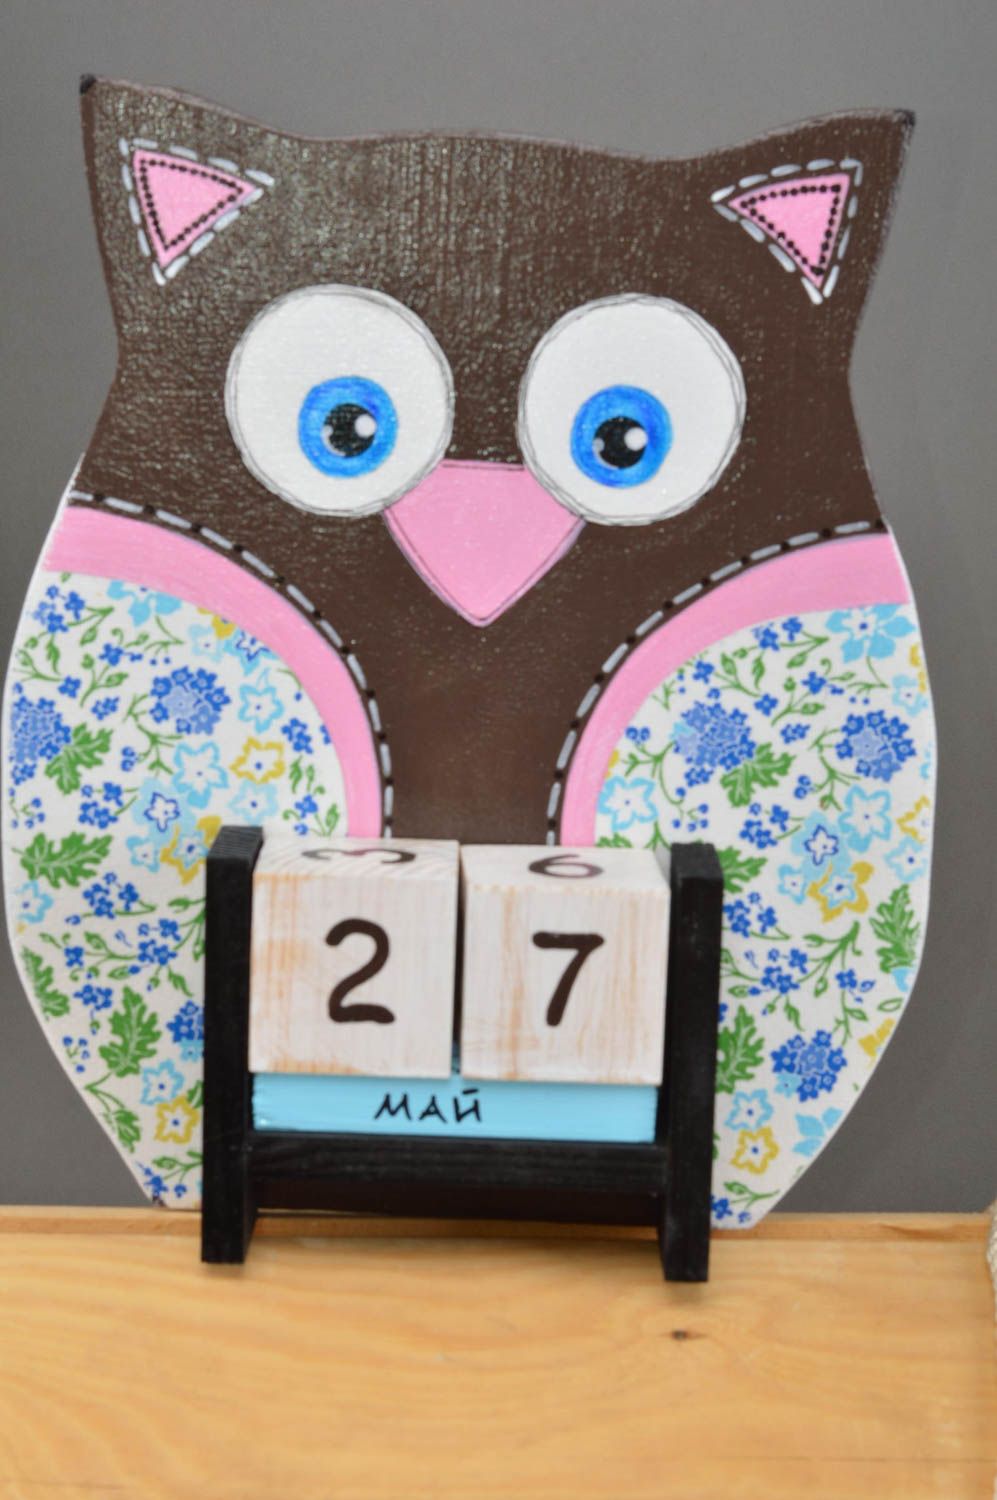 Handmade cute owl calendar unusual table decor stylish animal figurine photo 2